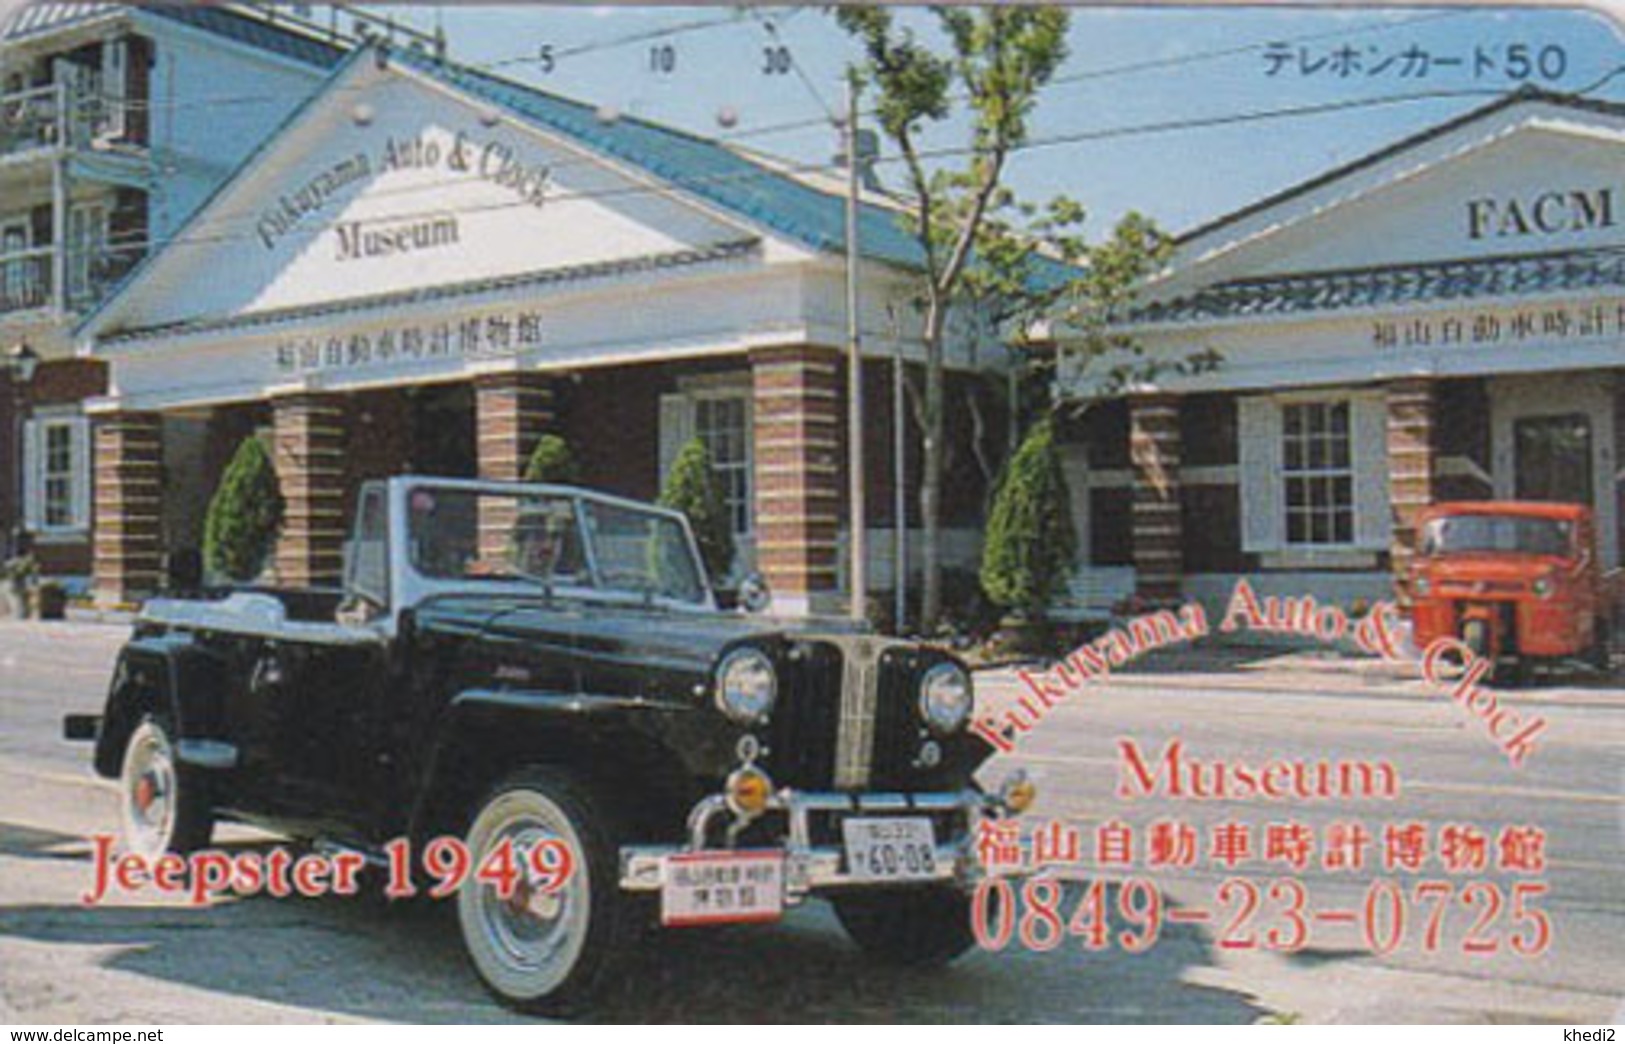 Télécarte Japon / 350-0745 - MUSEE - VOITURE JEEPSTER 1949 - AUTO & CLOCK MUSEUM - OLDTIMER CAR Japan Phonecard -  75 - Coches